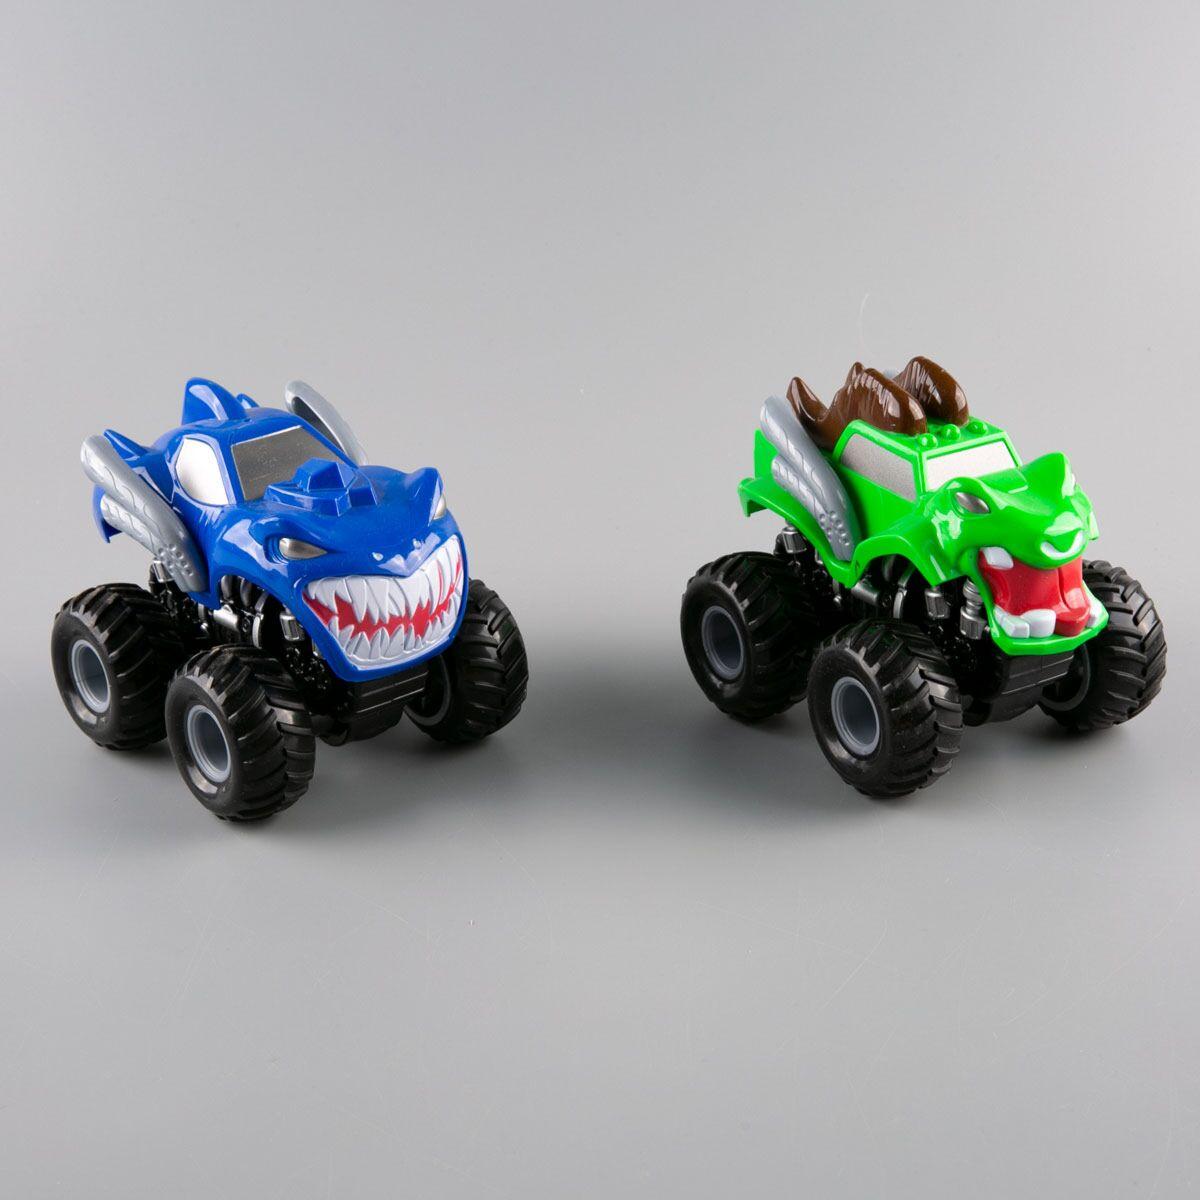 Monster SUV: Игровой набор 2 Машинки MONSTER SUV, на н/б, синий-зеленый